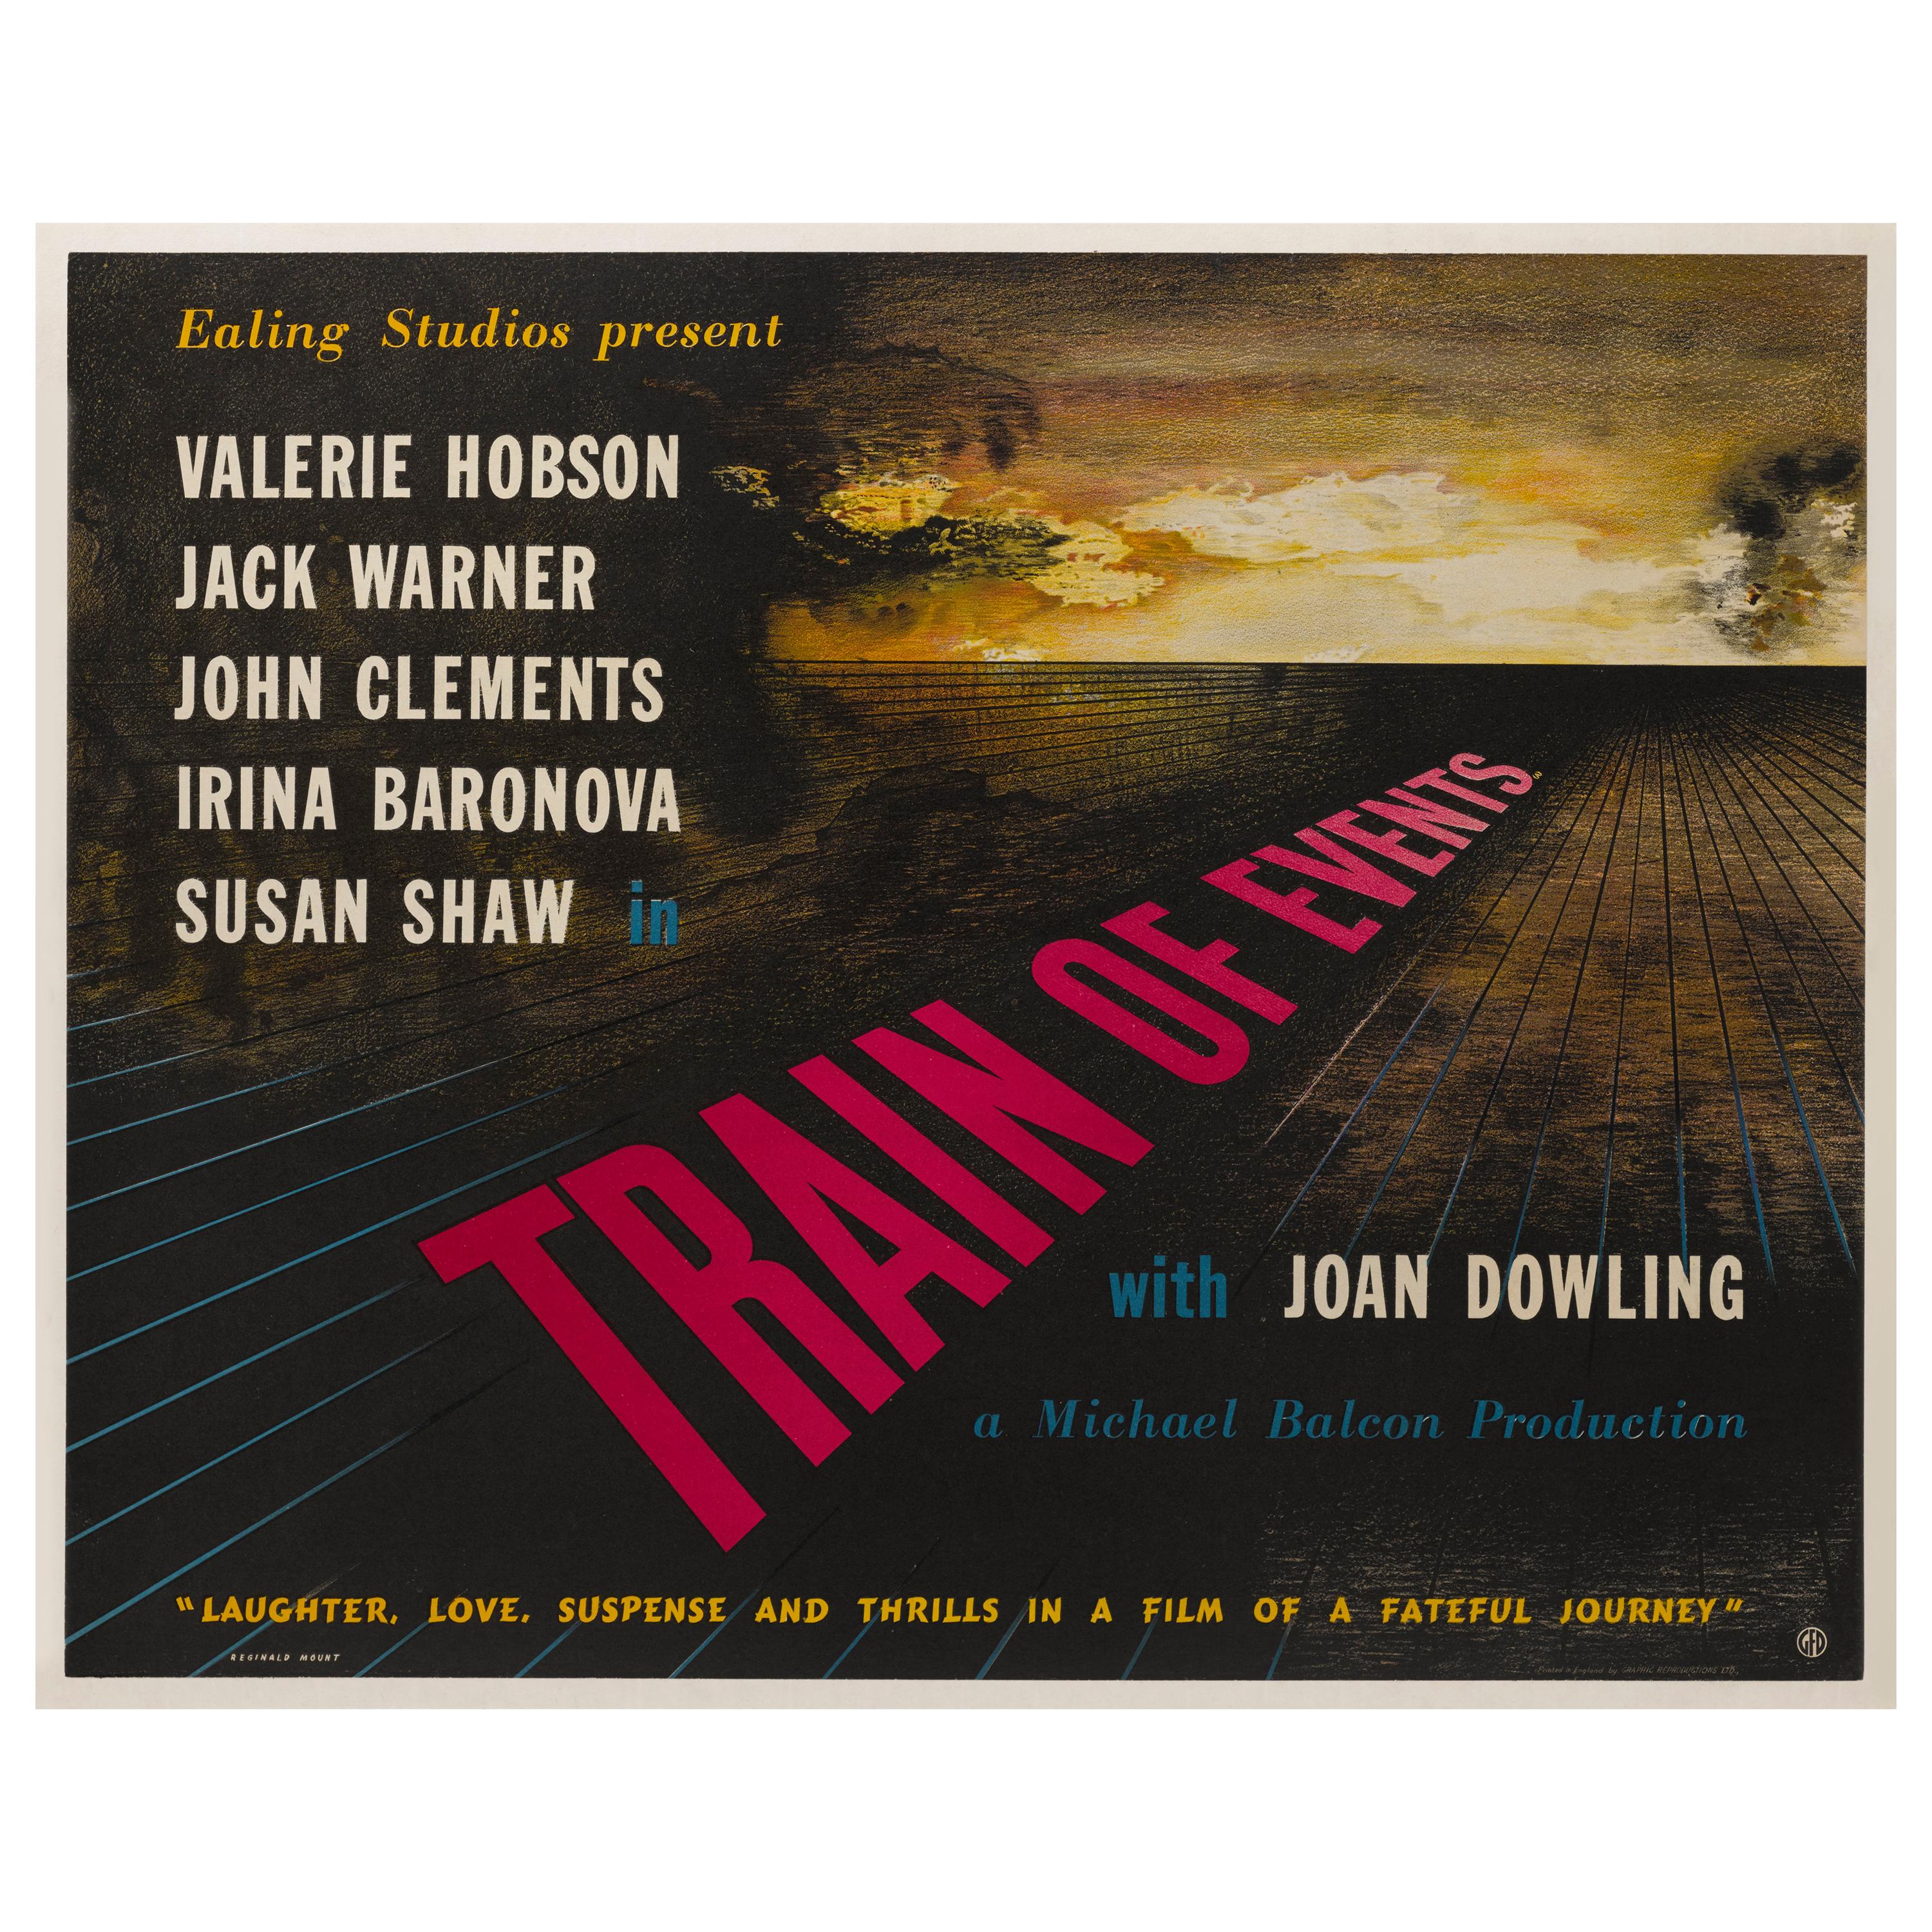 Affiche du film "Train of Event" (Train of Event) en vente